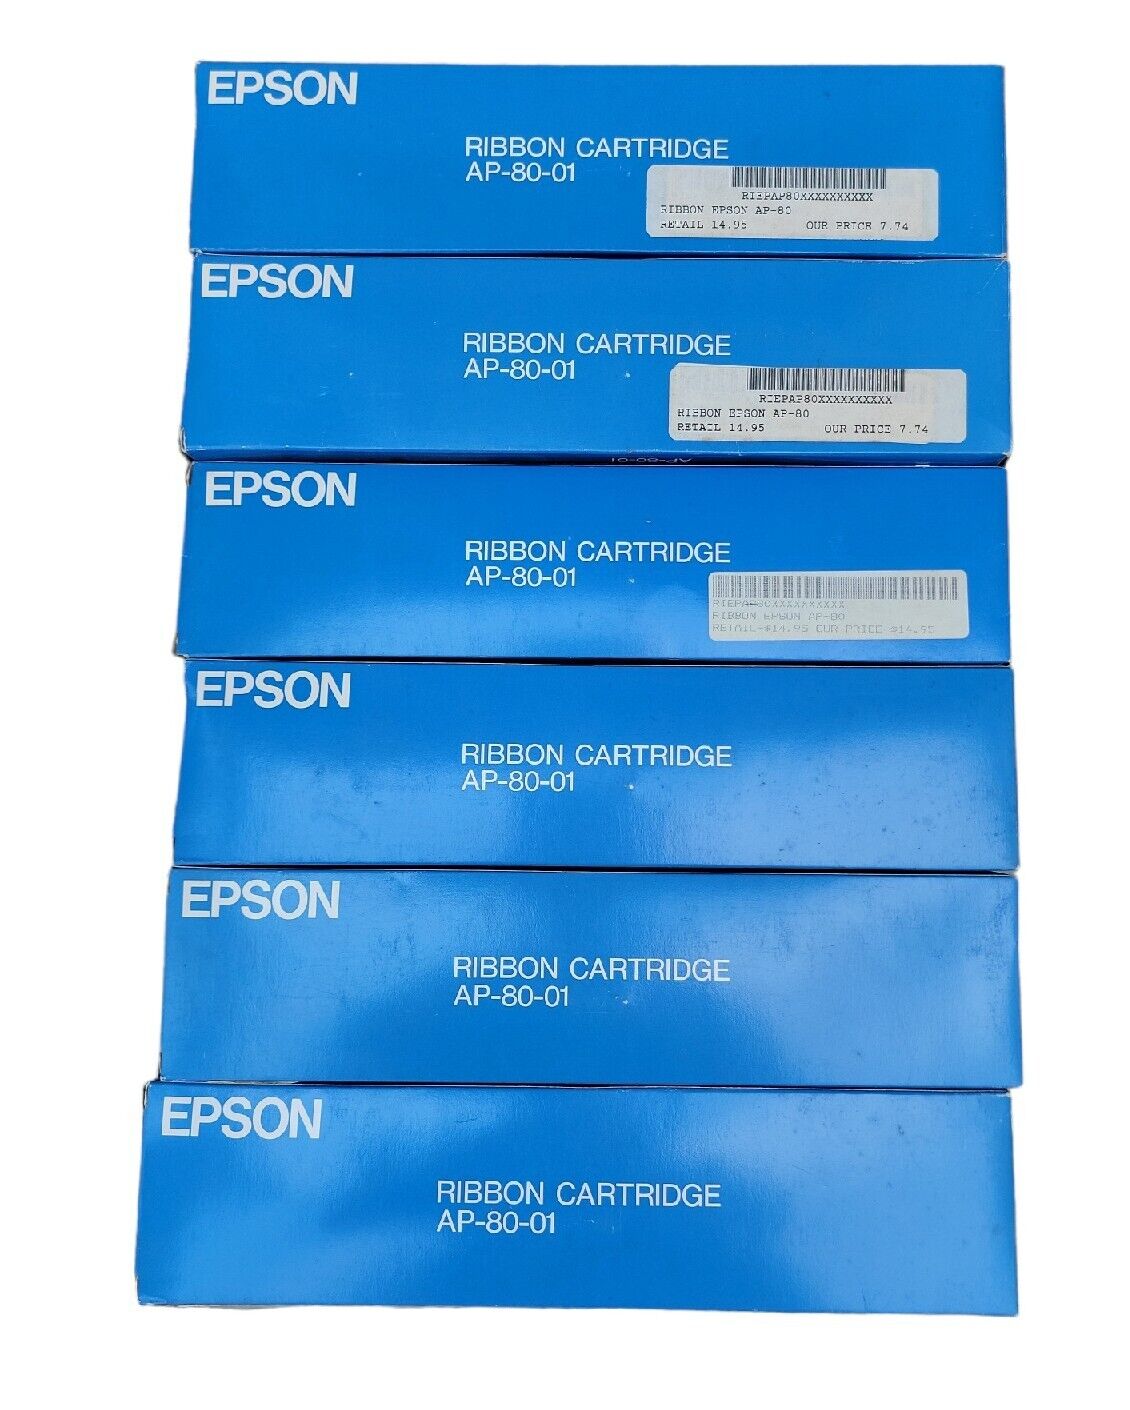 EPSON Original Ribbon Cartridge AP-80-01 Lot Of 6 Catridges AP-80